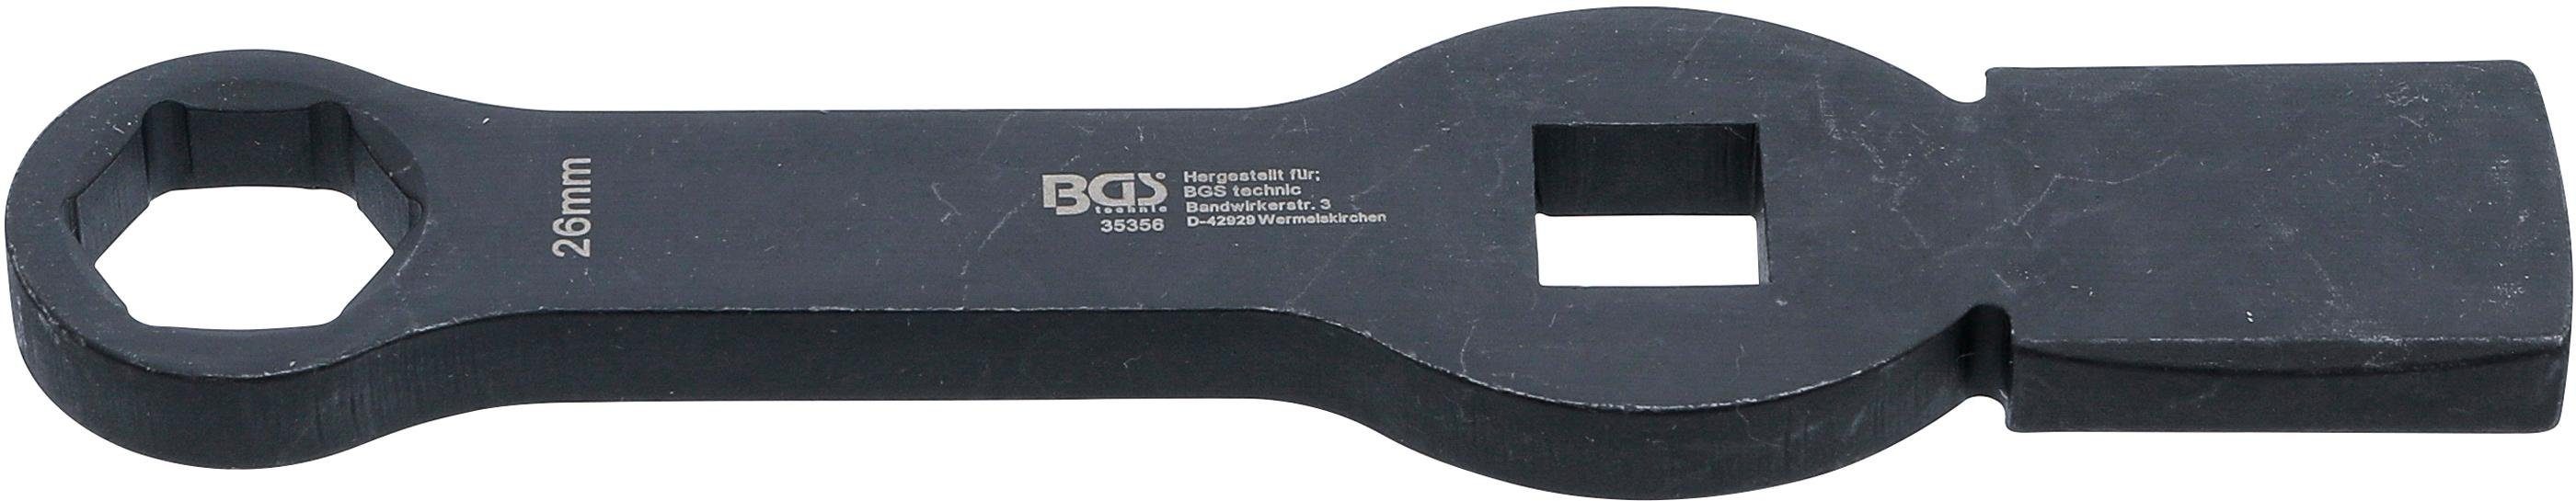 BGS technic Ringschlüssel Schlag-Ringschlüssel, Sechskant, mit 2 Schlagflächen, SW 26 mm